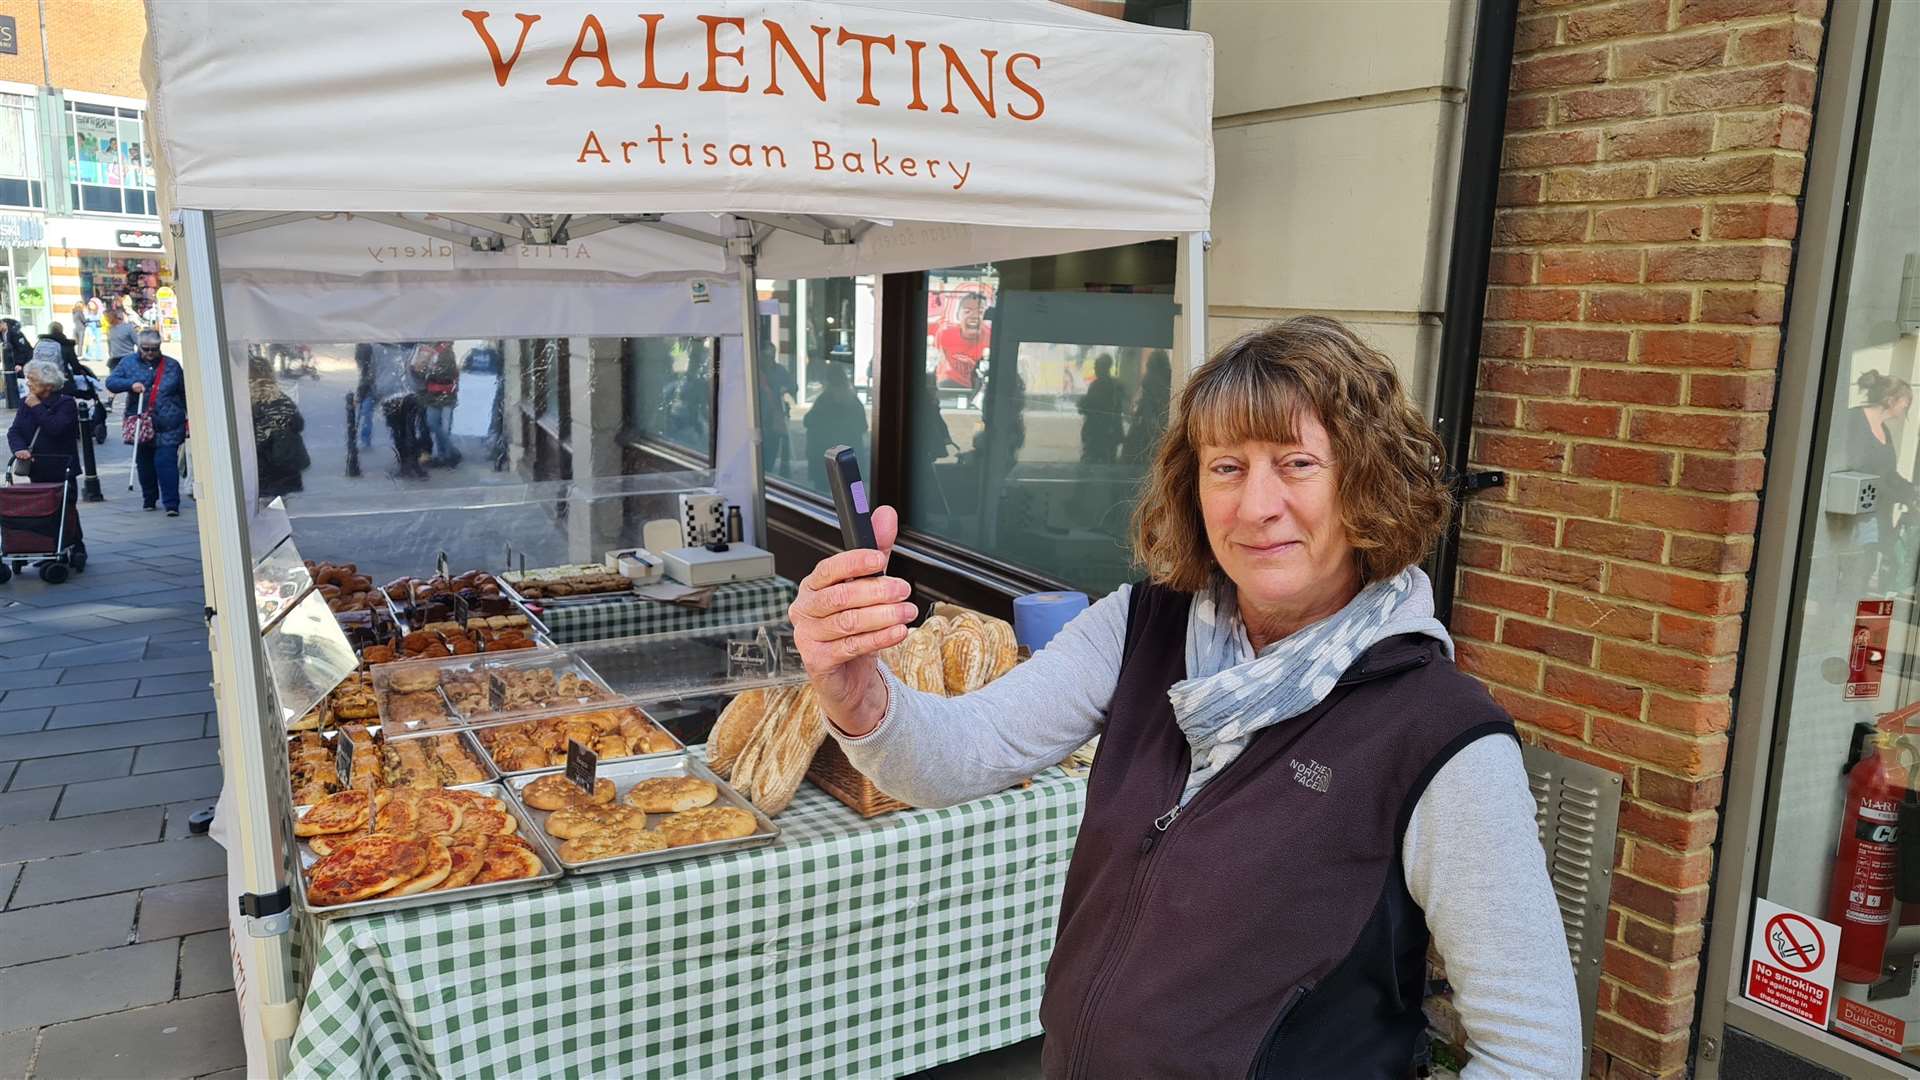 Lesley Riding, Valentins Artisan Bakery stallholder in Canterbury city centre